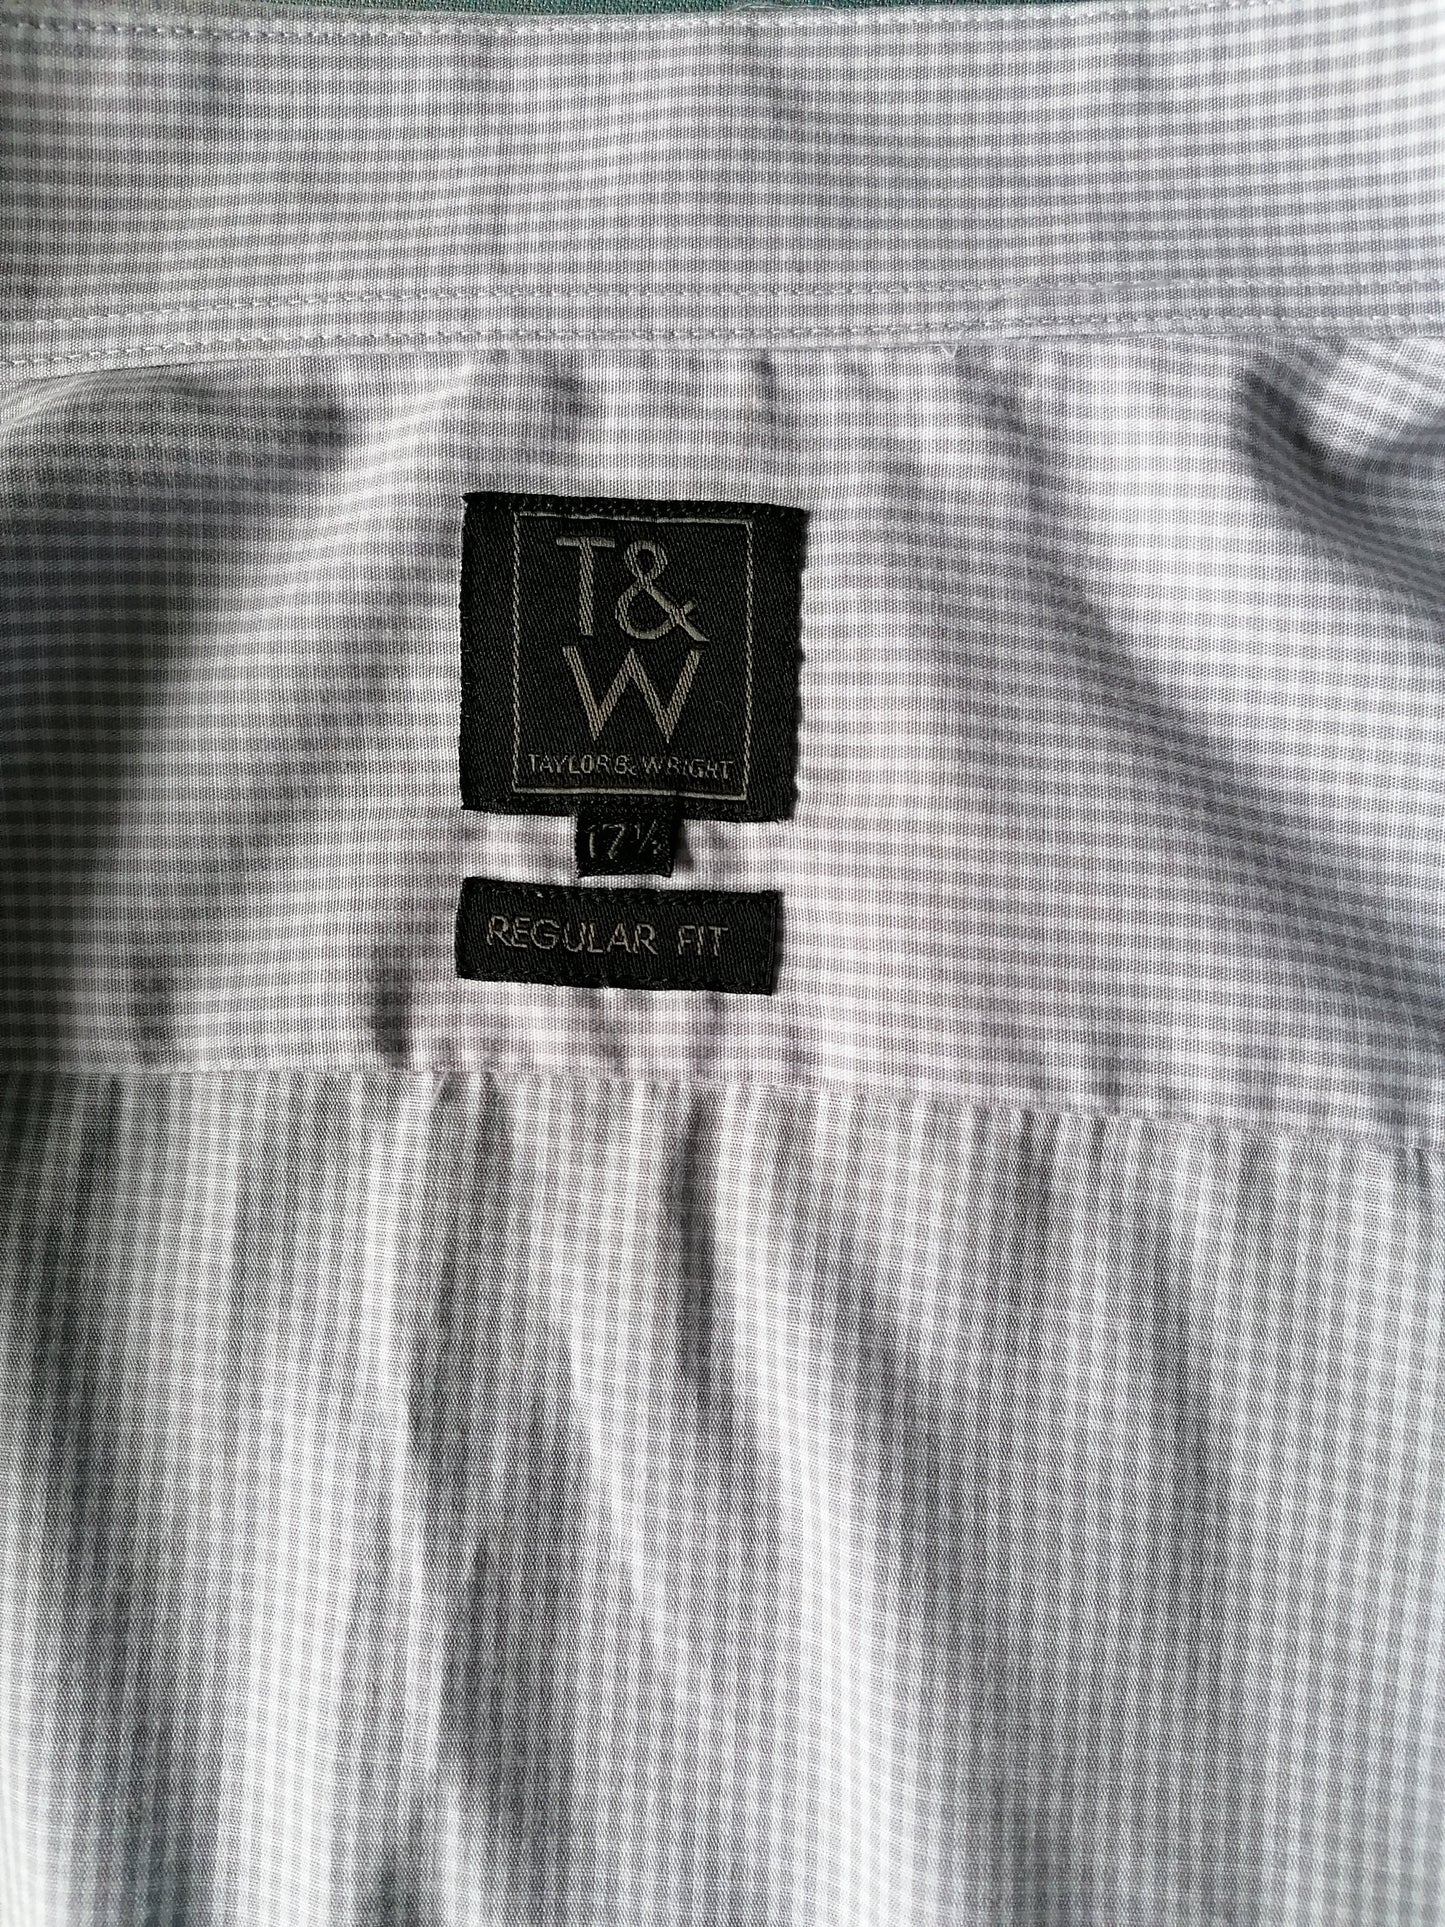 Taylor & Wright Shirt. Graues weißes Motiv. Größe XL / XXL. Normale Passform. Fällt groß